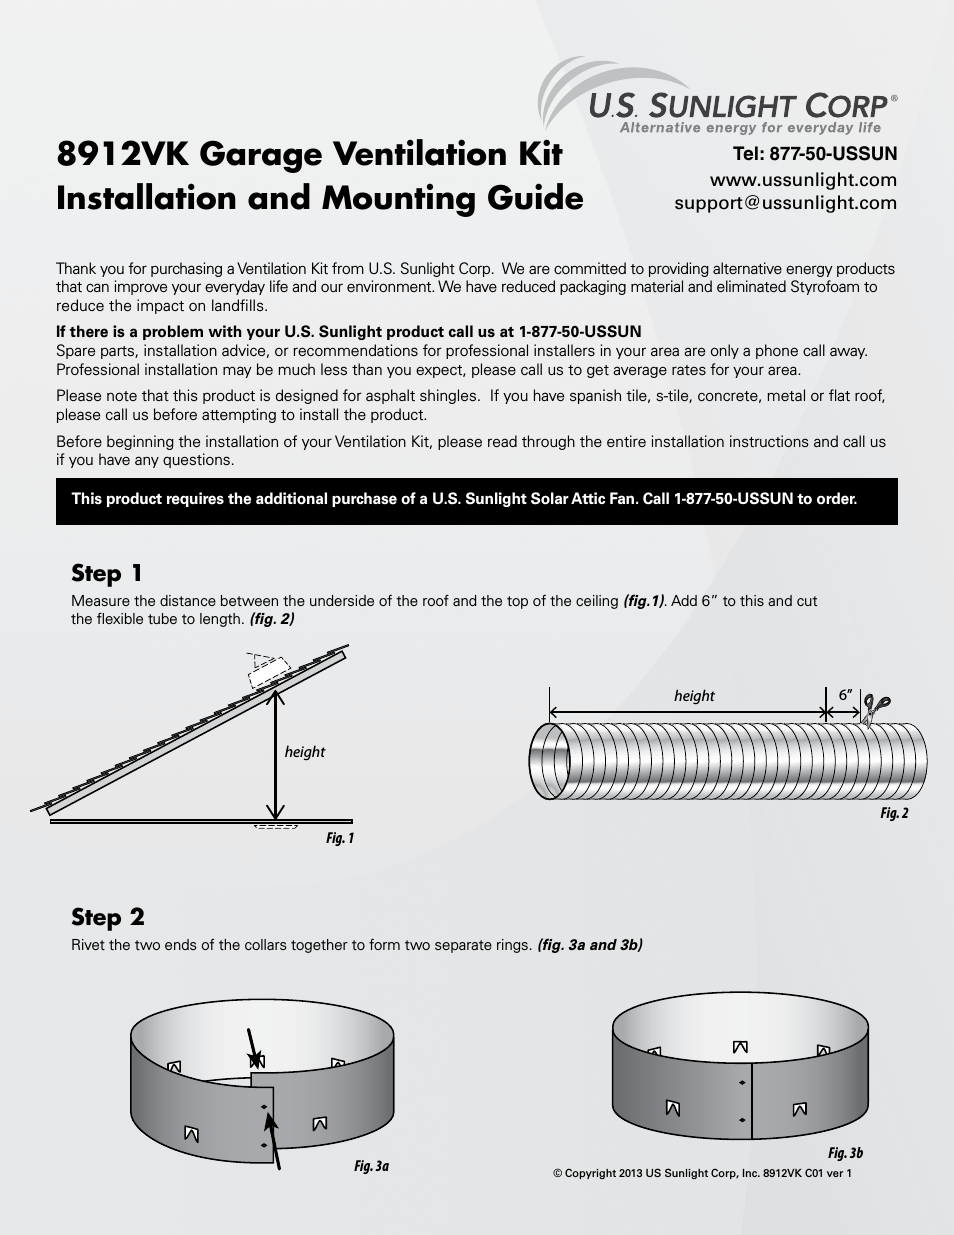 9910TR Multi-Purpose Ventilation Kit